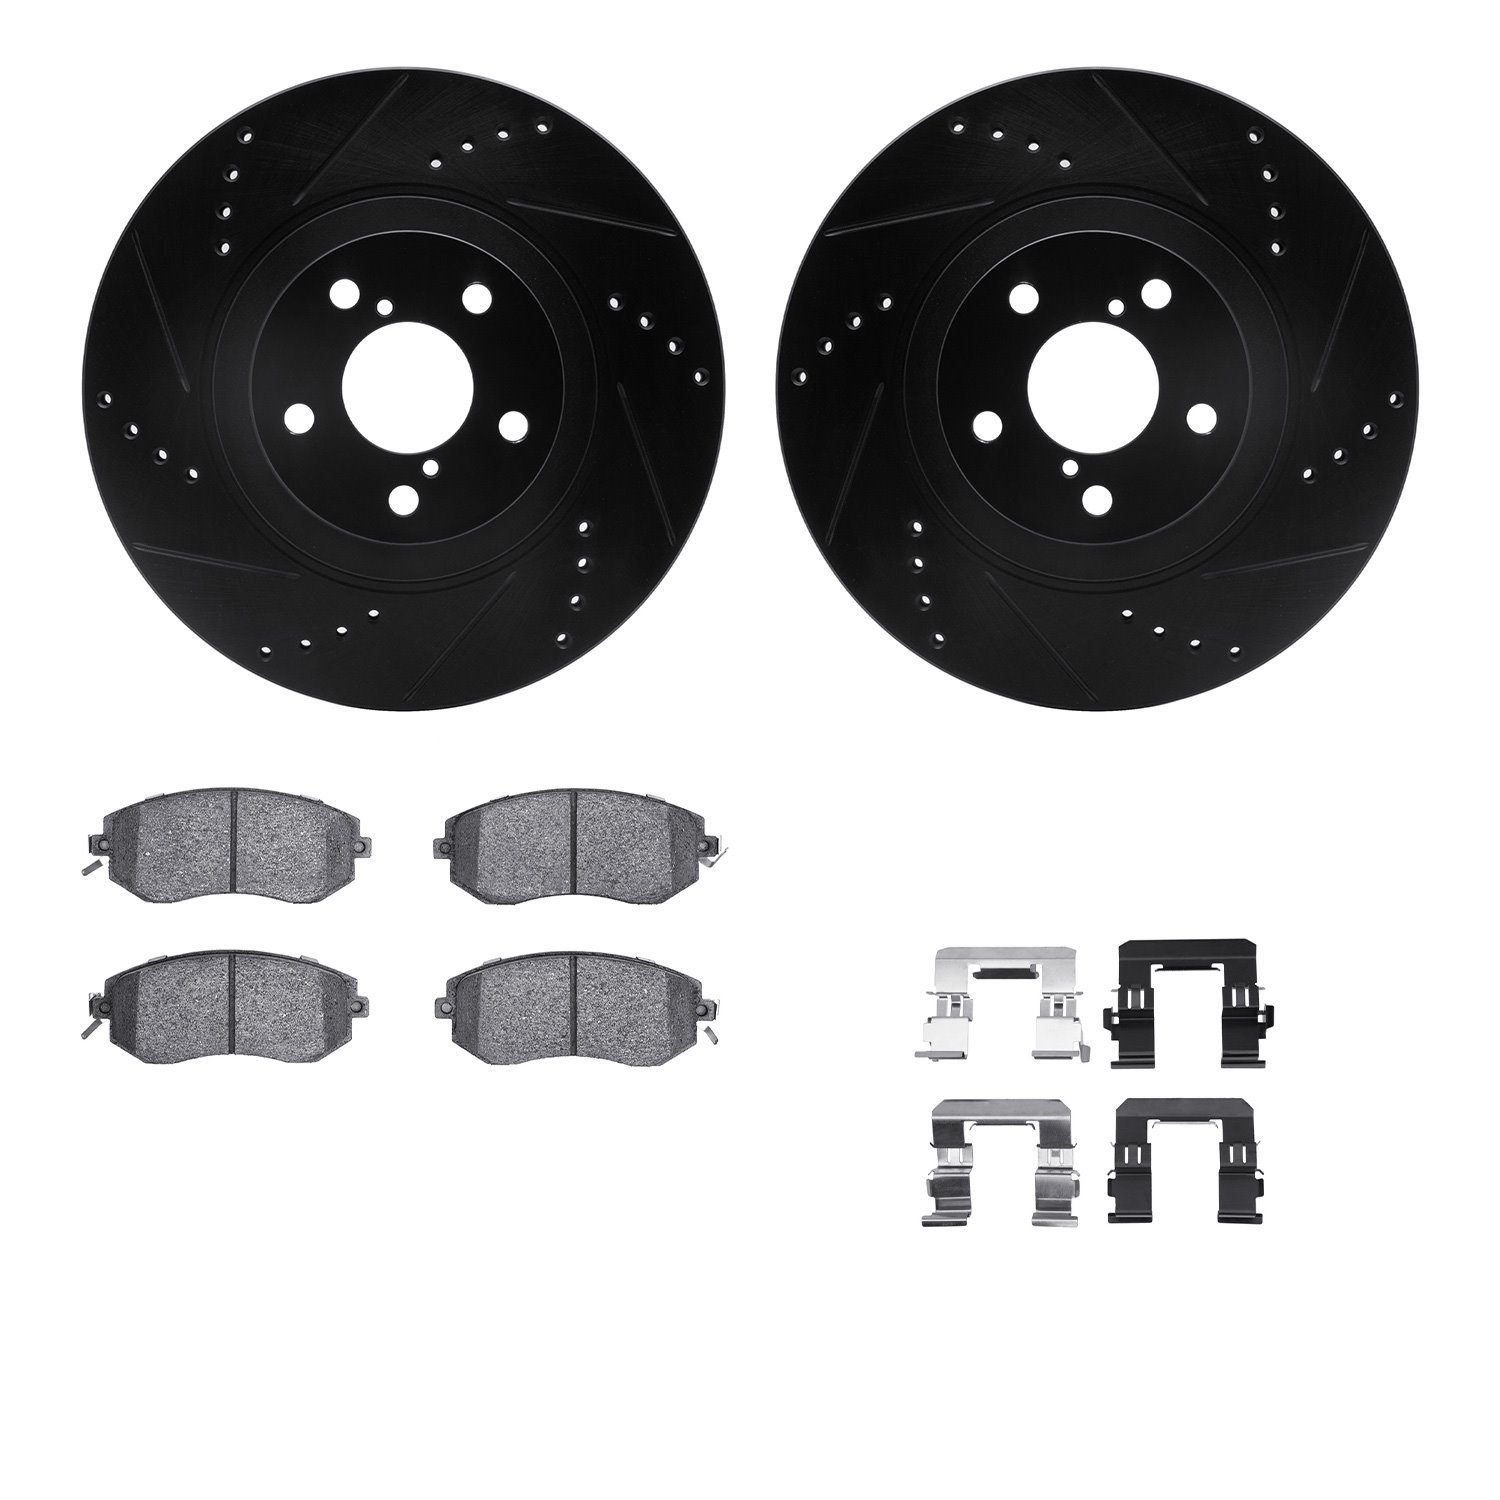 8312-13051 Drilled/Slotted Brake Rotors with 3000-Series Ceramic Brake Pads Kit & Hardware [Black], Fits Select Multiple Makes/M